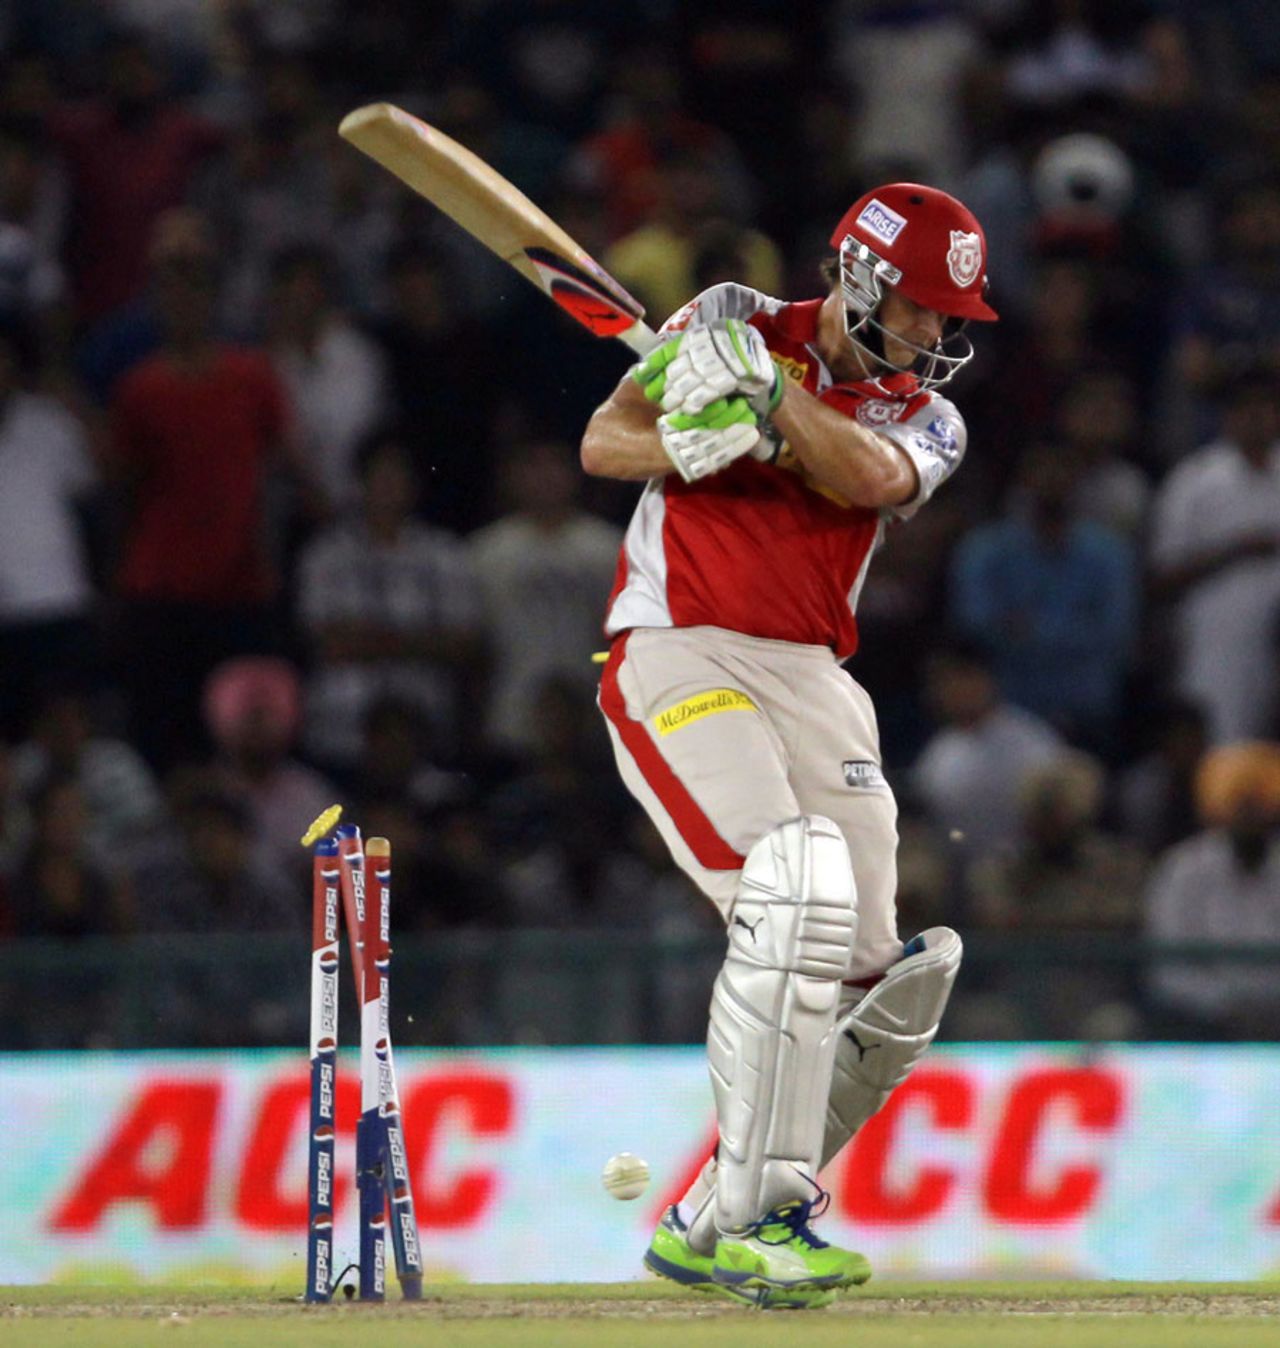 Adam Gilchrist is bowled by Darren Sammy, Kings XI Punjab v Sunrisers Hyderabad, IPL, Mohali, May 11, 2013